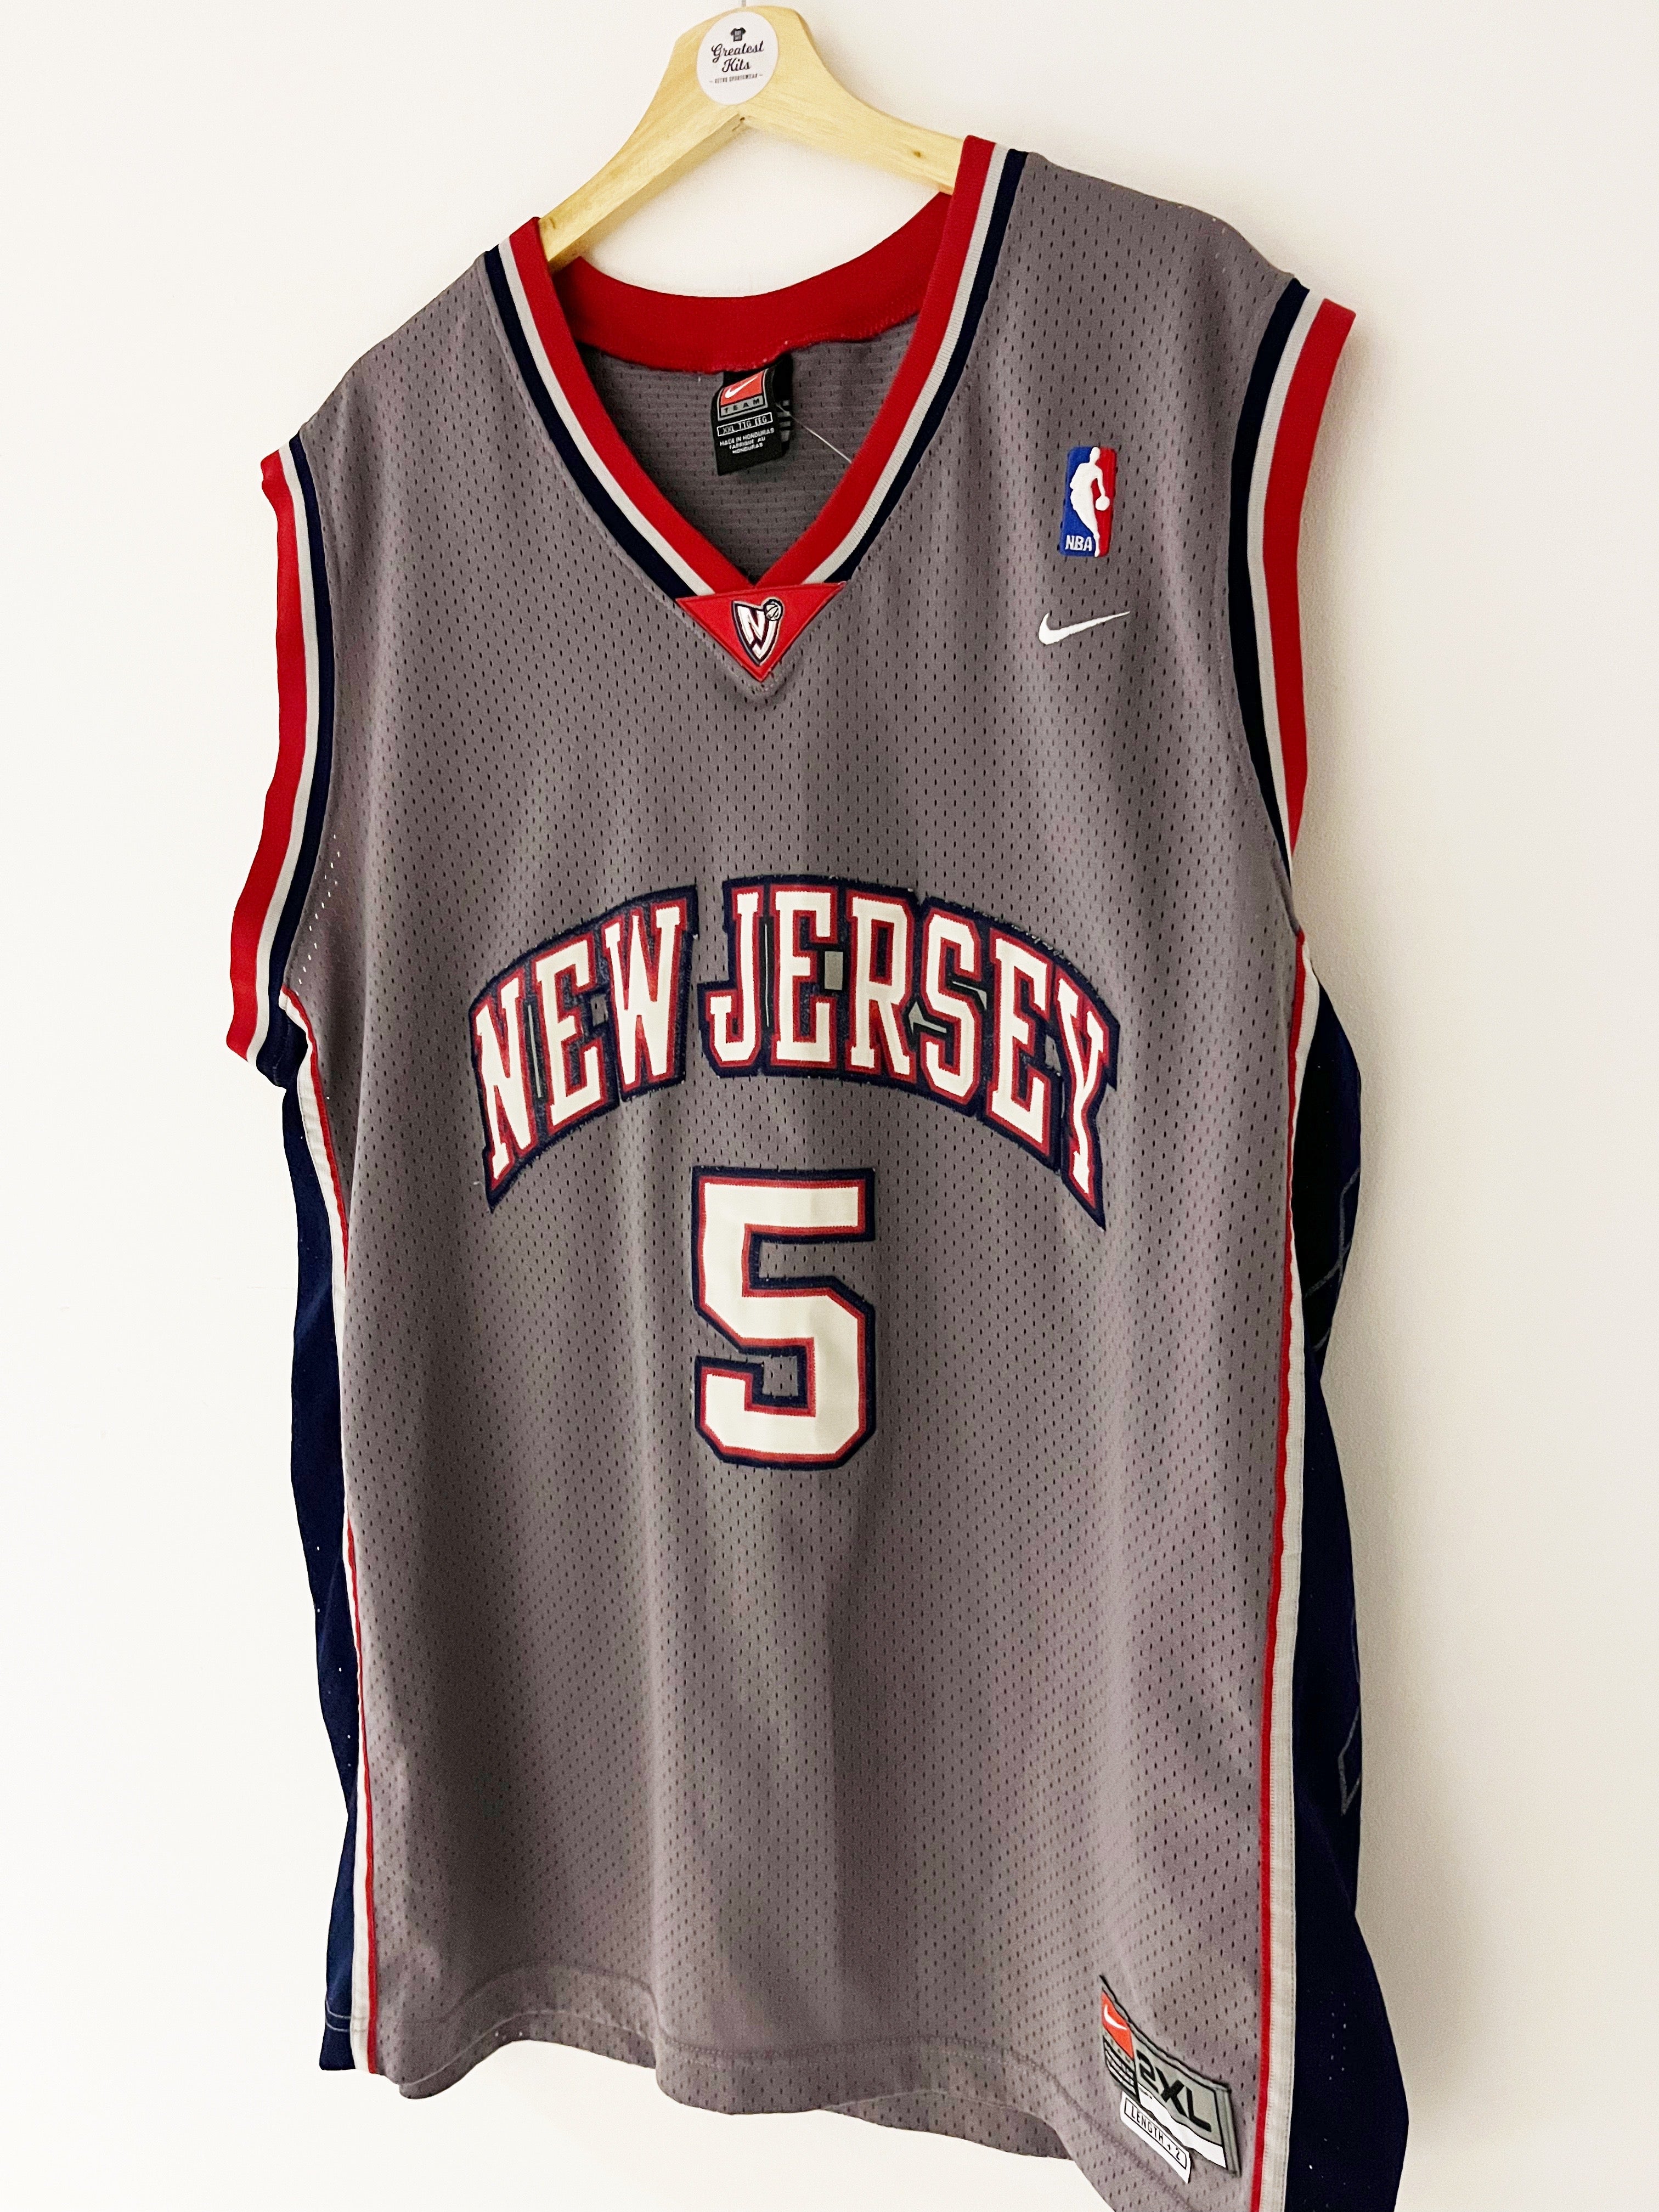 2002 New Jersey Nets Nike Maillot Alternatif Kidd #5 (2XL) 9/10